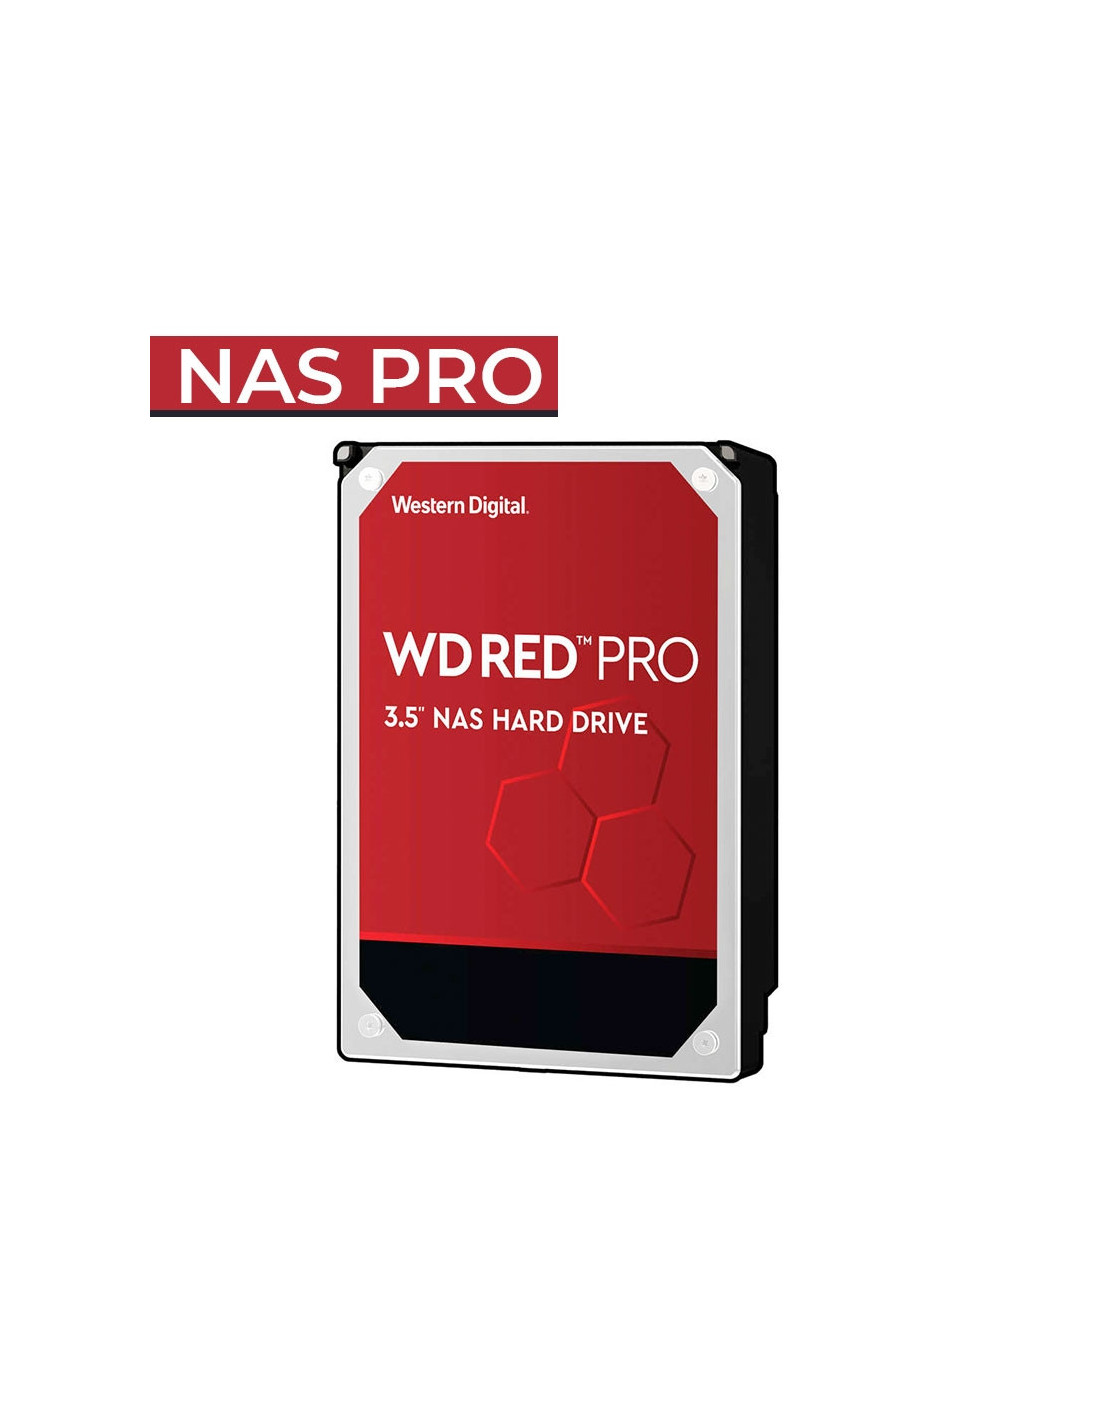 Disco duro  WD8003FFBX 8TB HDD 3.5" Edición RED NAS PRO 7200RPM 256MB.